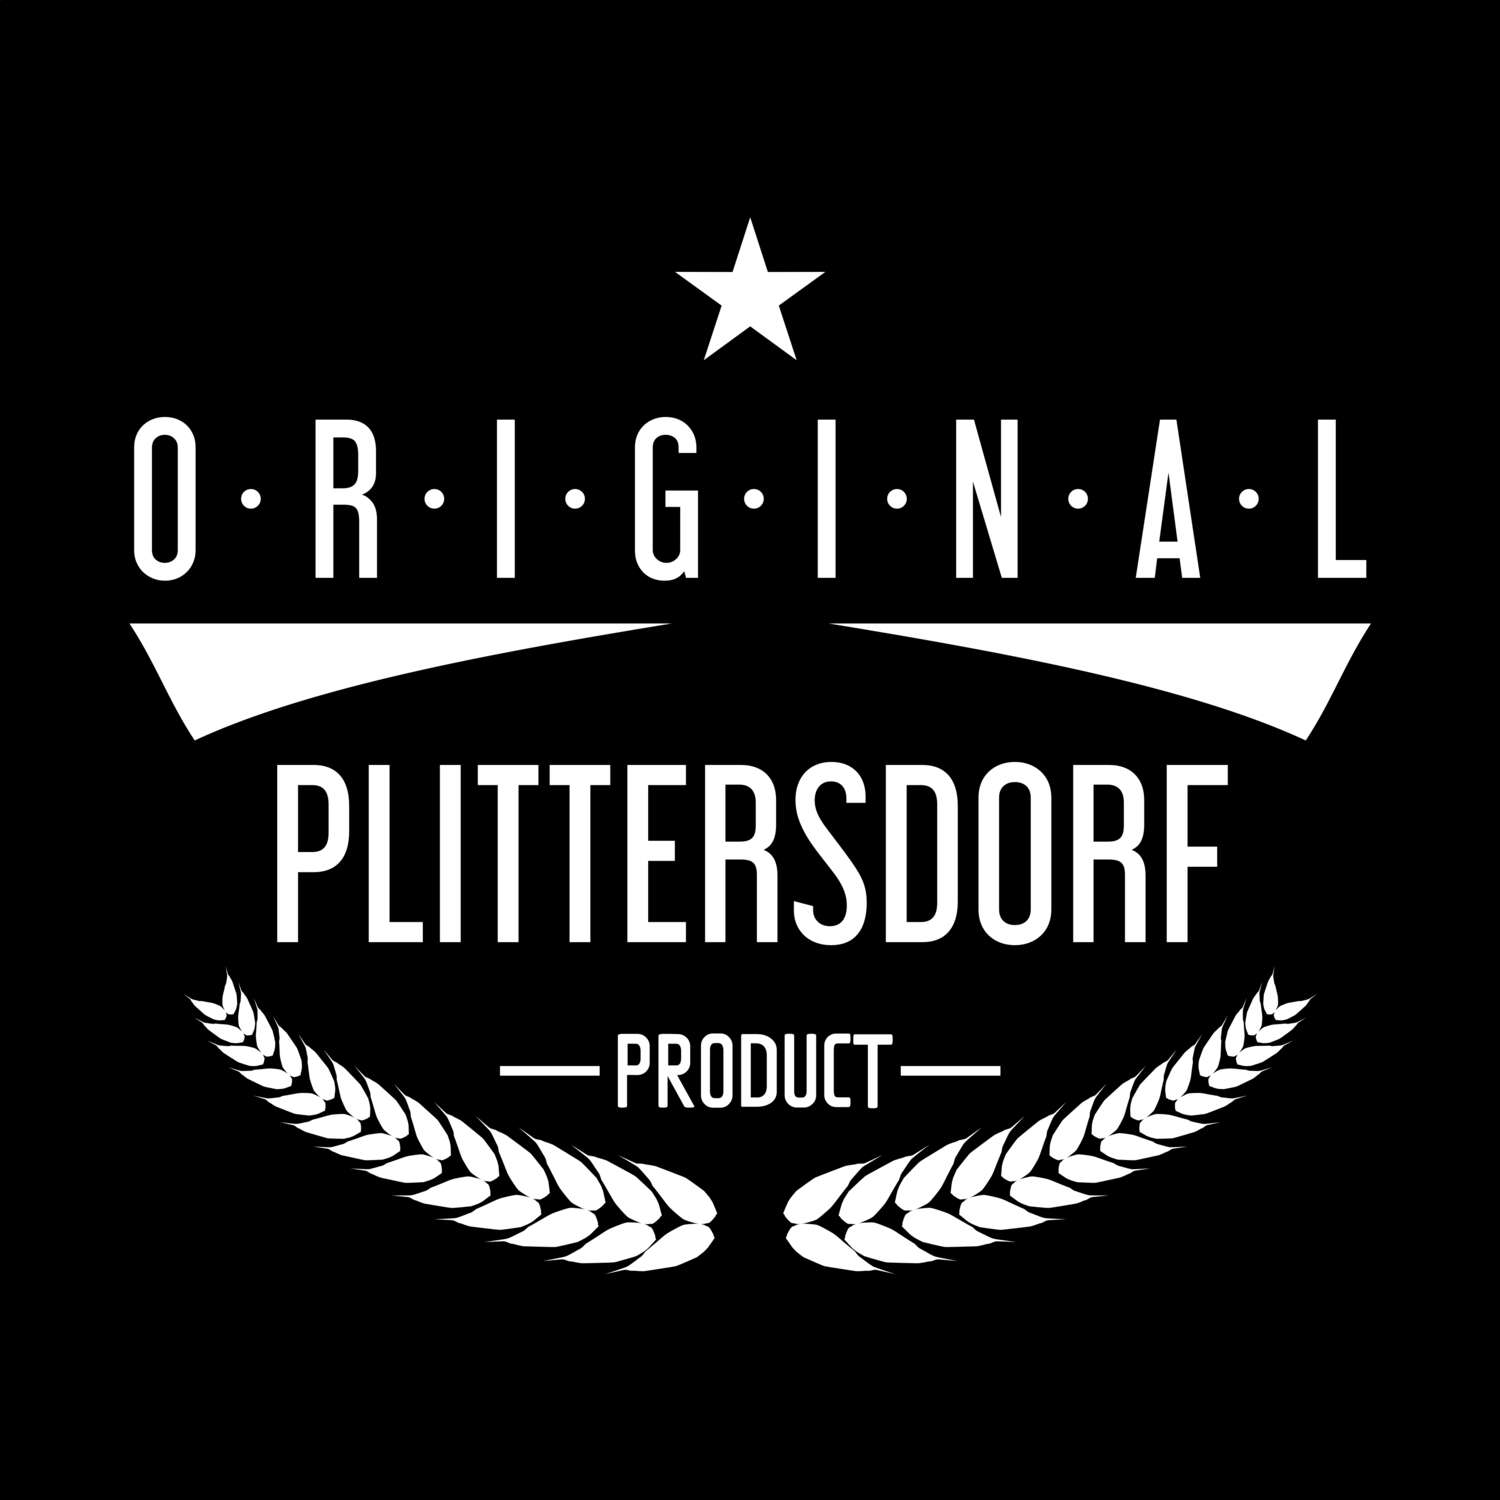 Plittersdorf T-Shirt »Original Product«